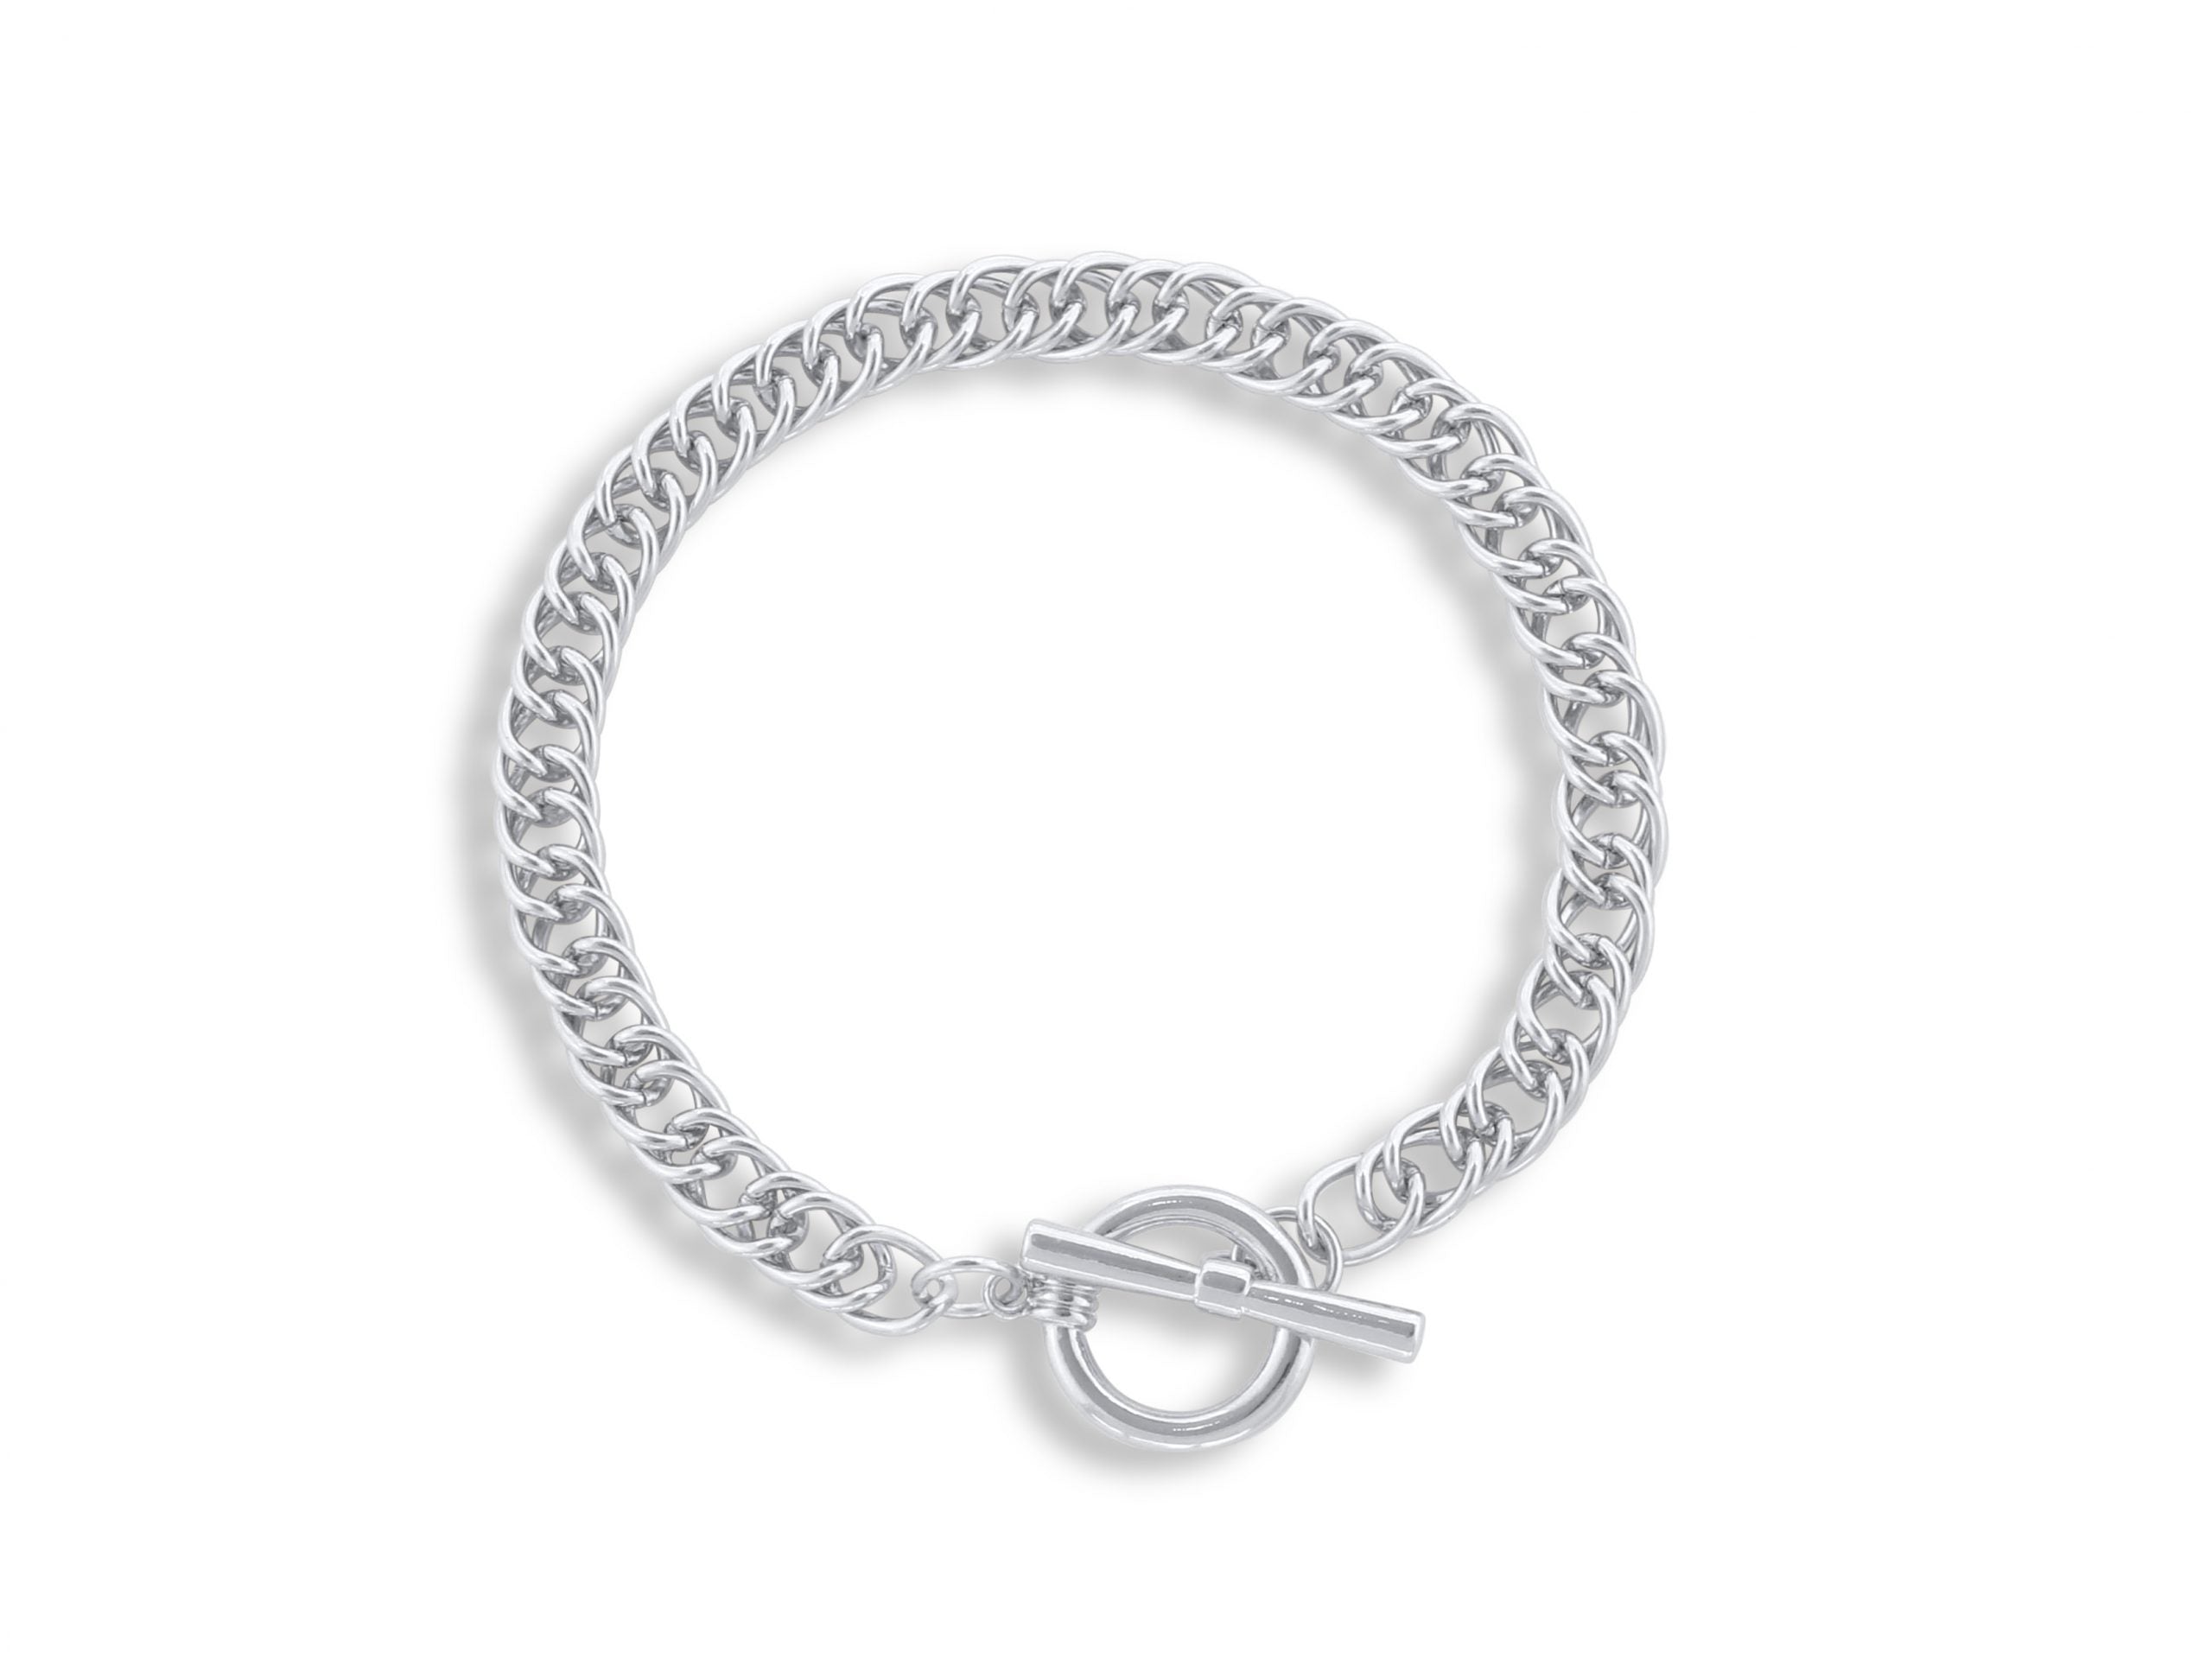 Silver Molly Curb Bracelet - The Nancy Smillie Shop - Art, Jewellery & Designer Gifts Glasgow